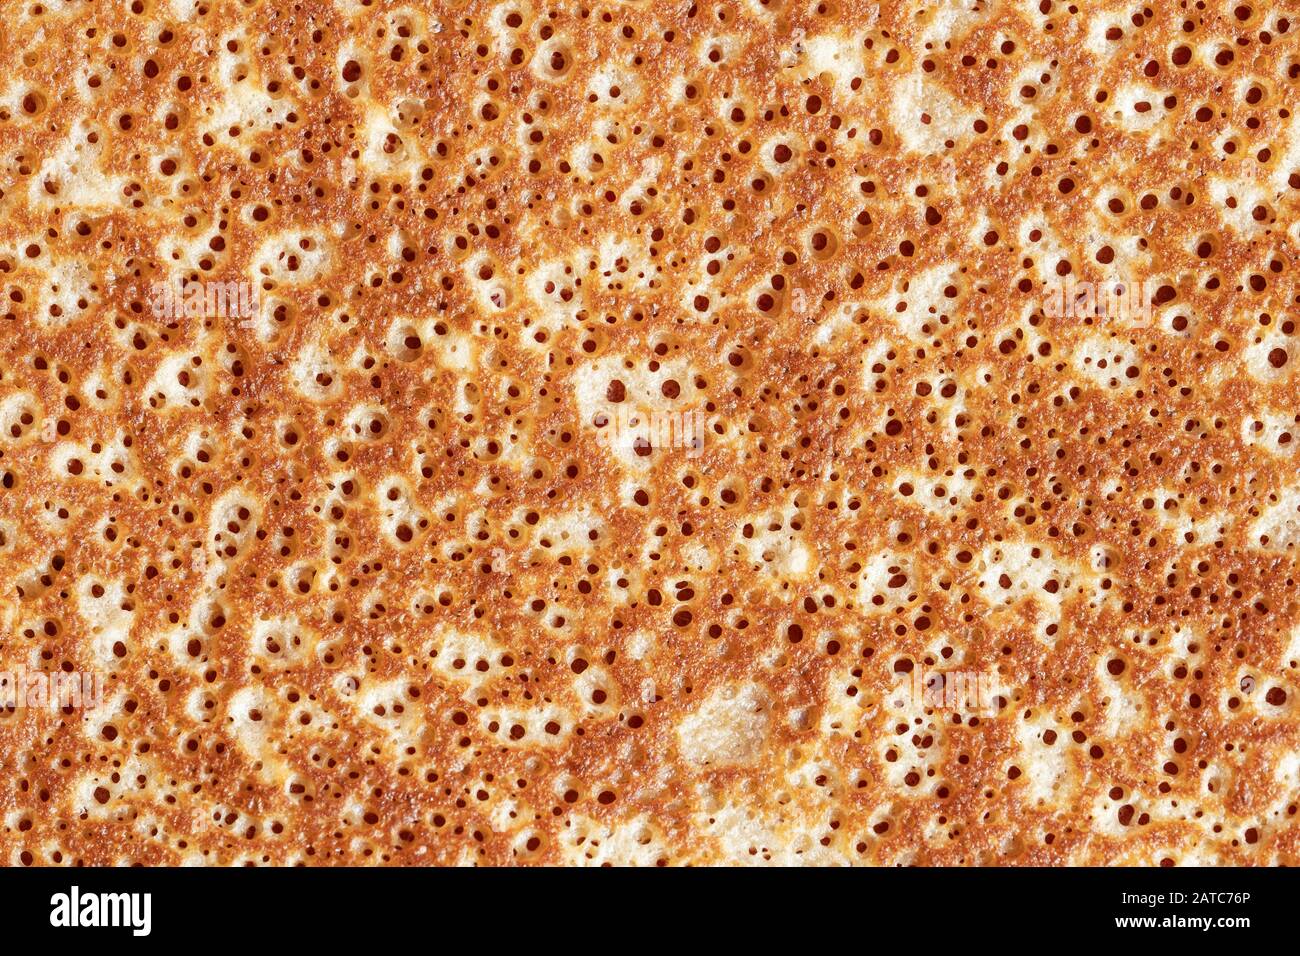 Close-up of a newly baked pancake Stock Photo